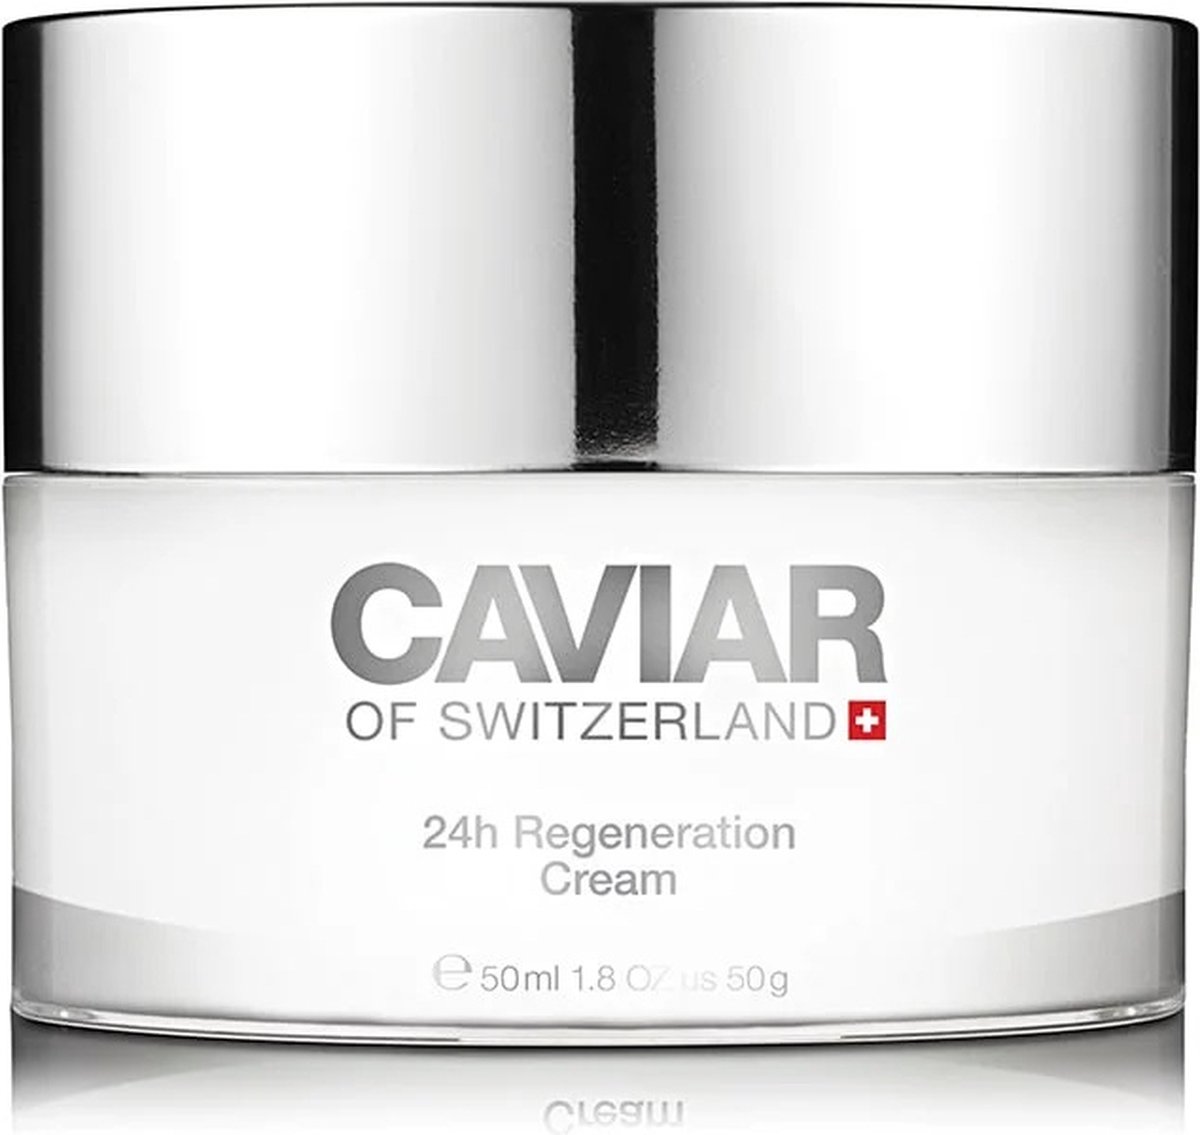 Skin Caviar Luxe Cosmetica - Caviar of Switzerland - 24h Regeneration Cream - 50ml